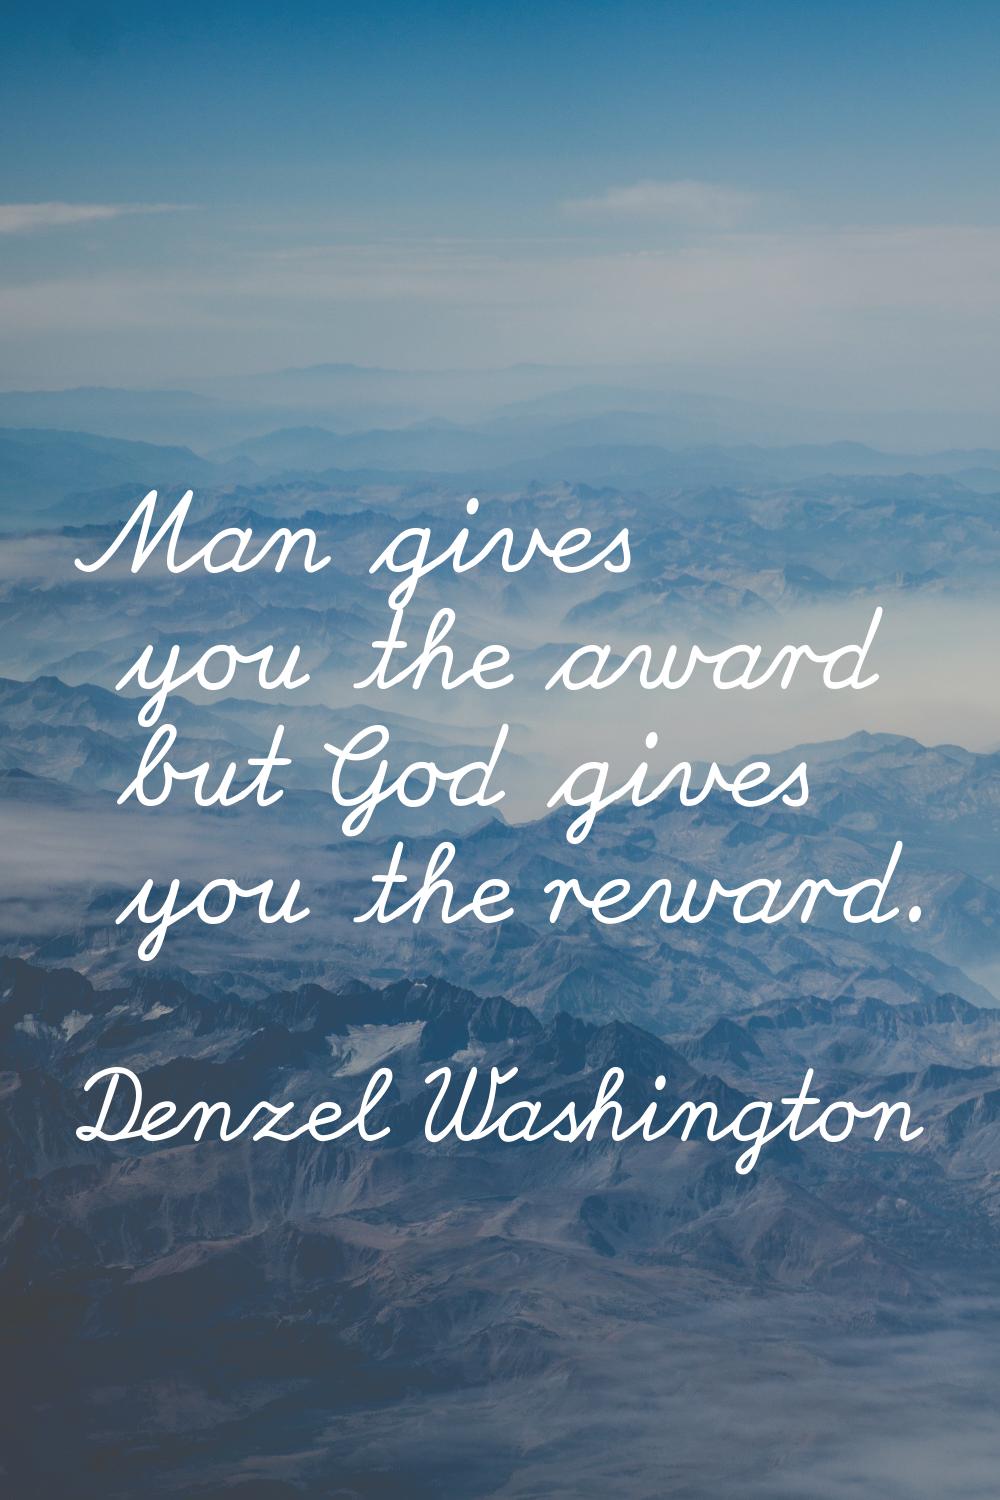 Man gives you the award but God gives you the reward.